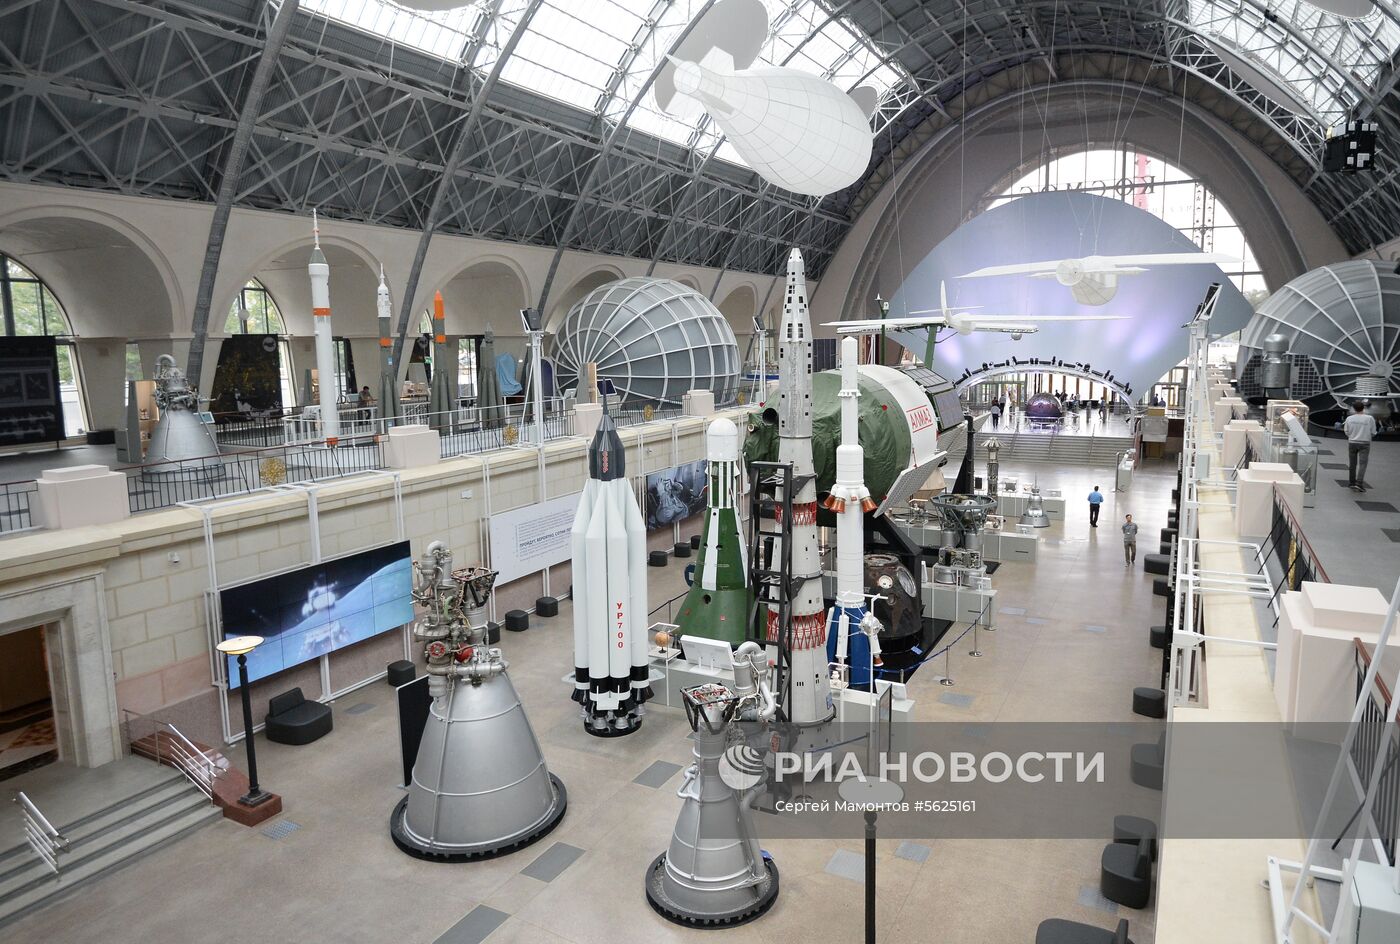 Центр "Космонавтика и авиация" на ВДНХ